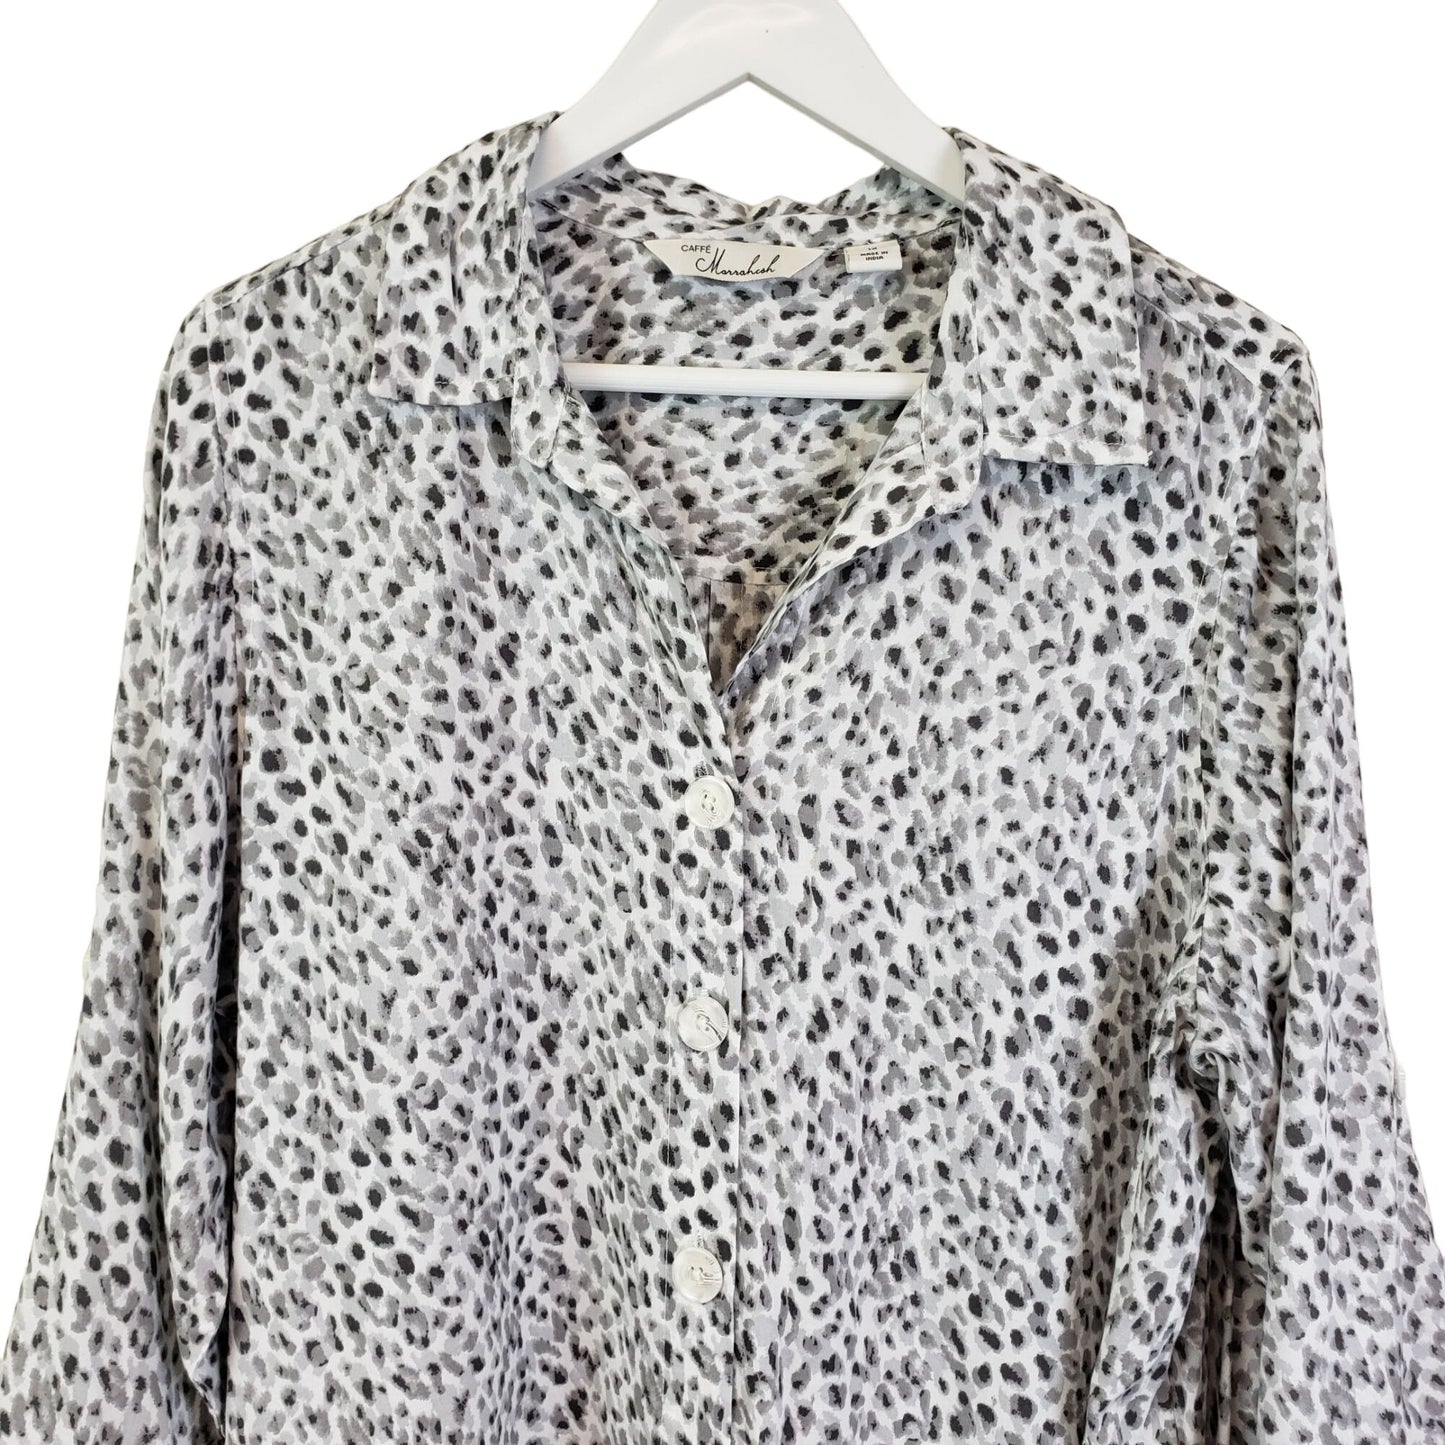 Cafe Marrakesh Leopard Print Button Down Shirt Size 1X